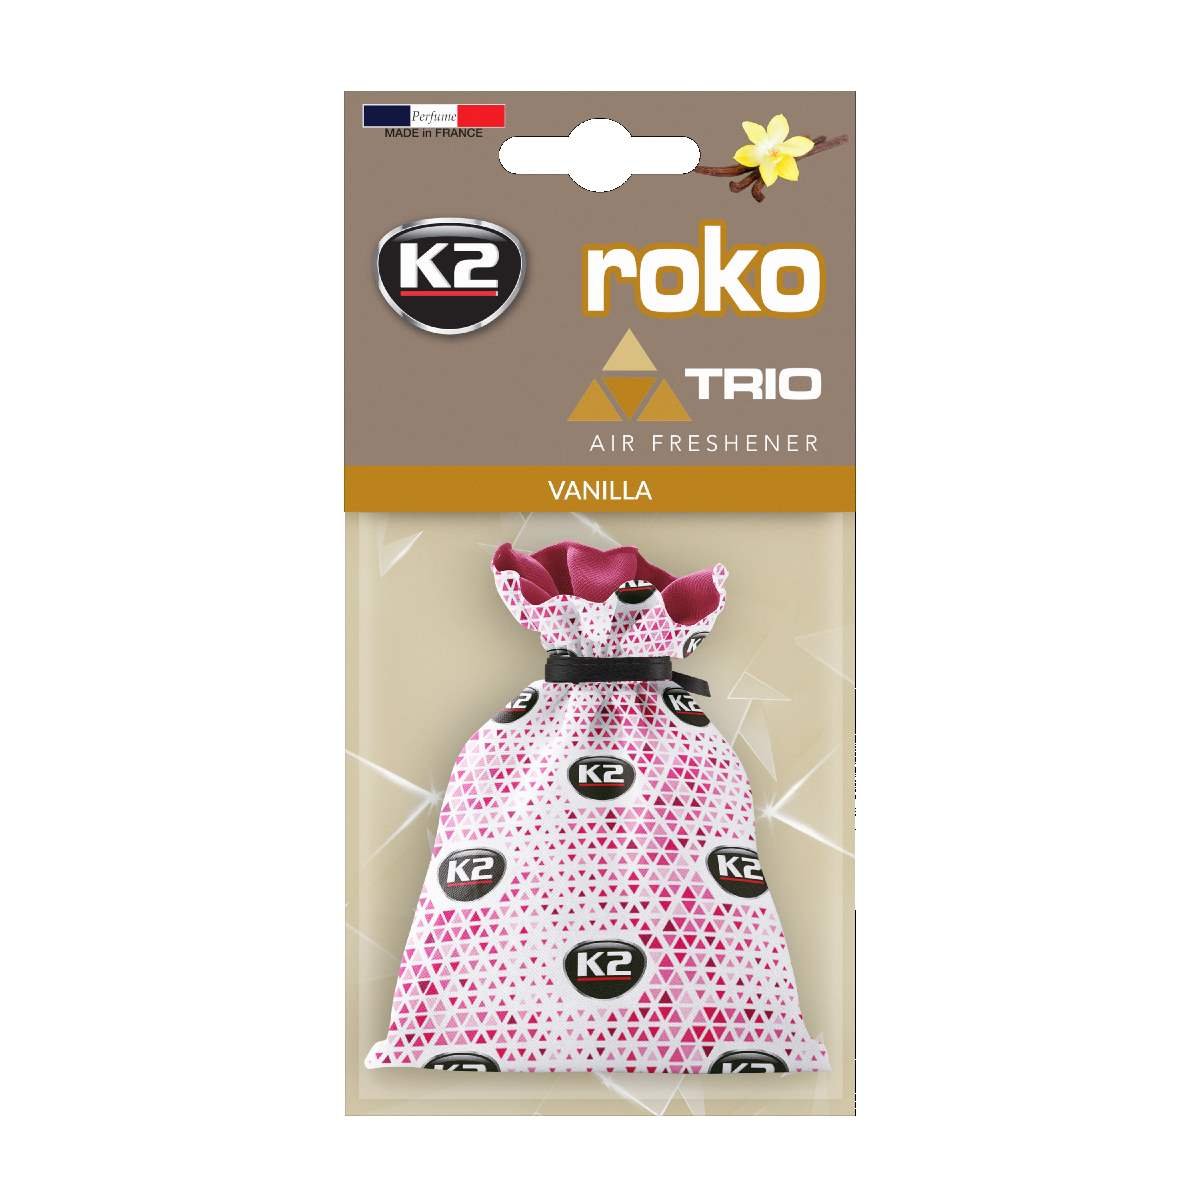 Air fresheners Air freshener ROKO TRIO Vanilla 25G  Art. K2V827T